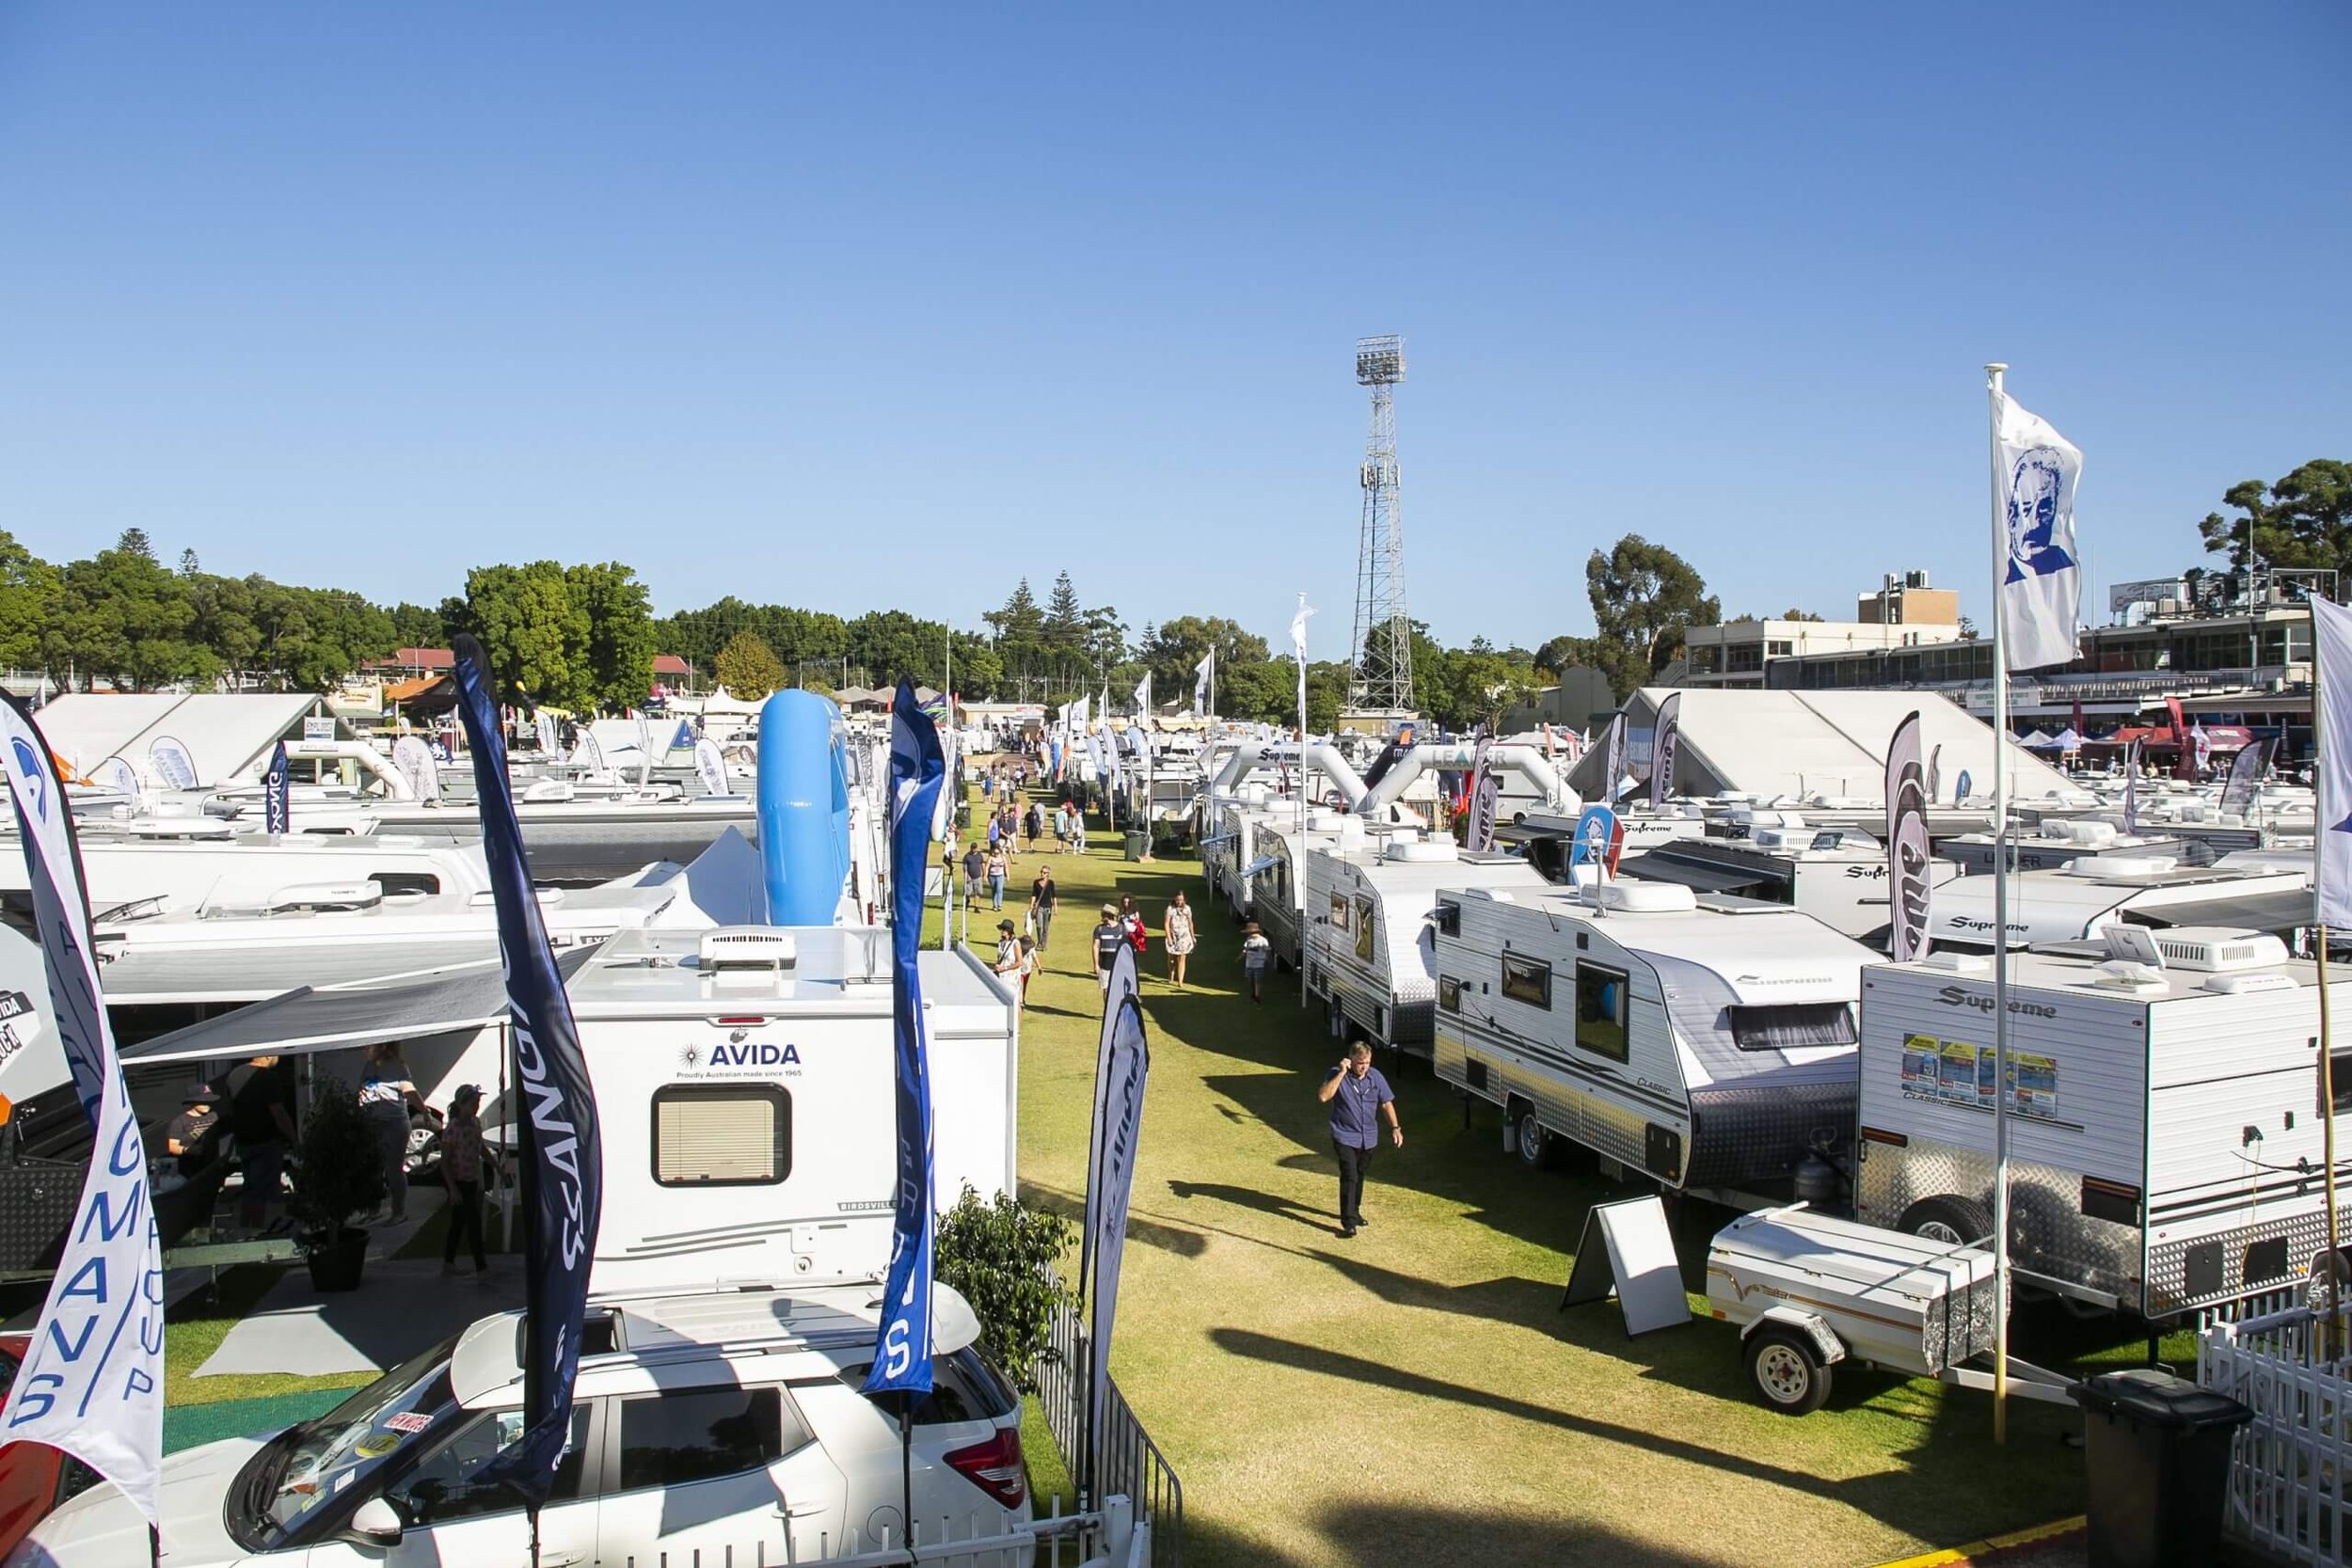 761-Perth-Caravan-and-Camping-Show-2-scaled.jpg